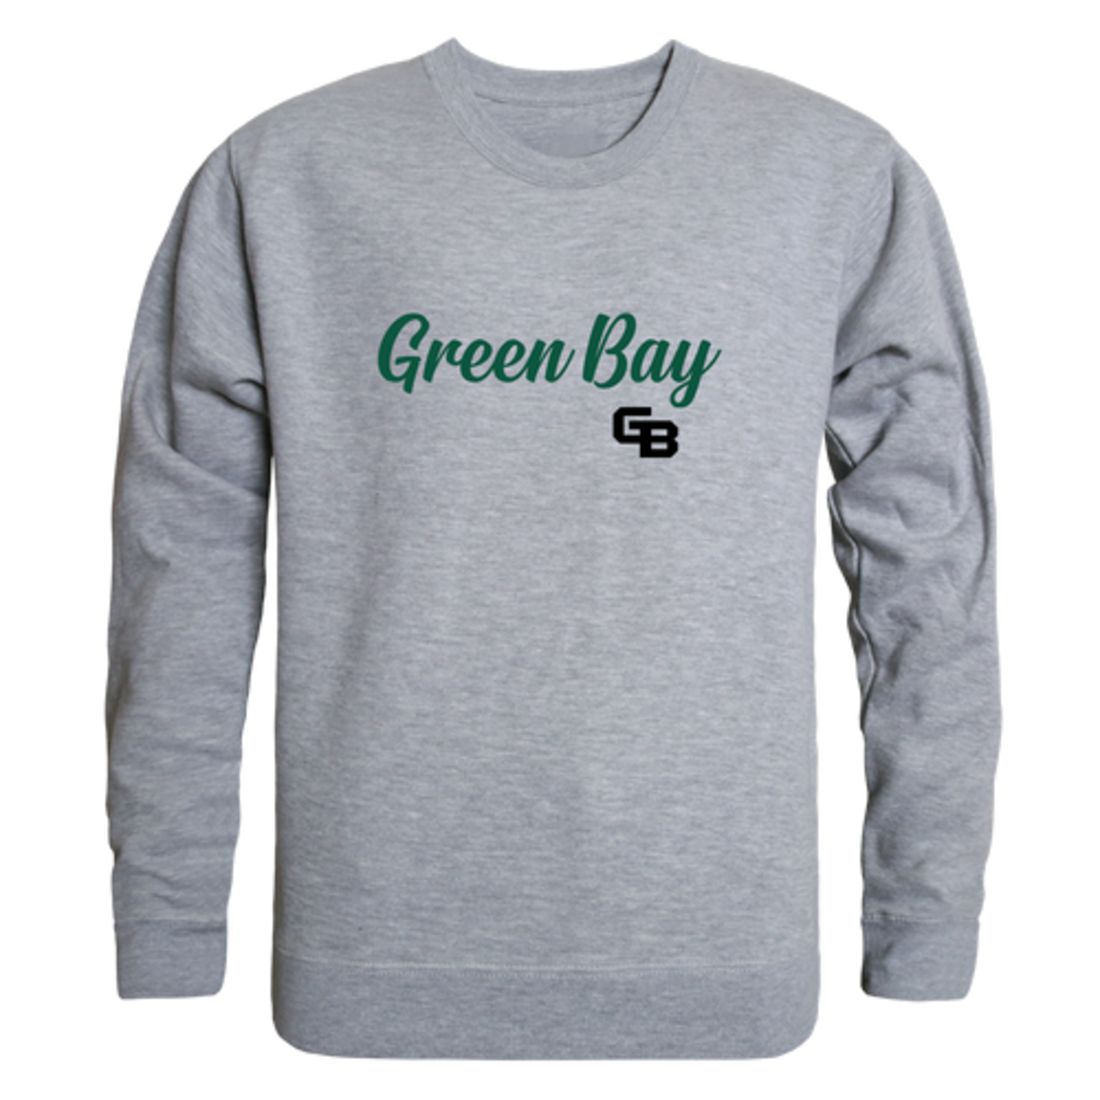 UWGB University of Wisconsin-Green Bay Phoenix Script Crewneck Pullover Sweatshirt Sweater Black-Campus-Wardrobe